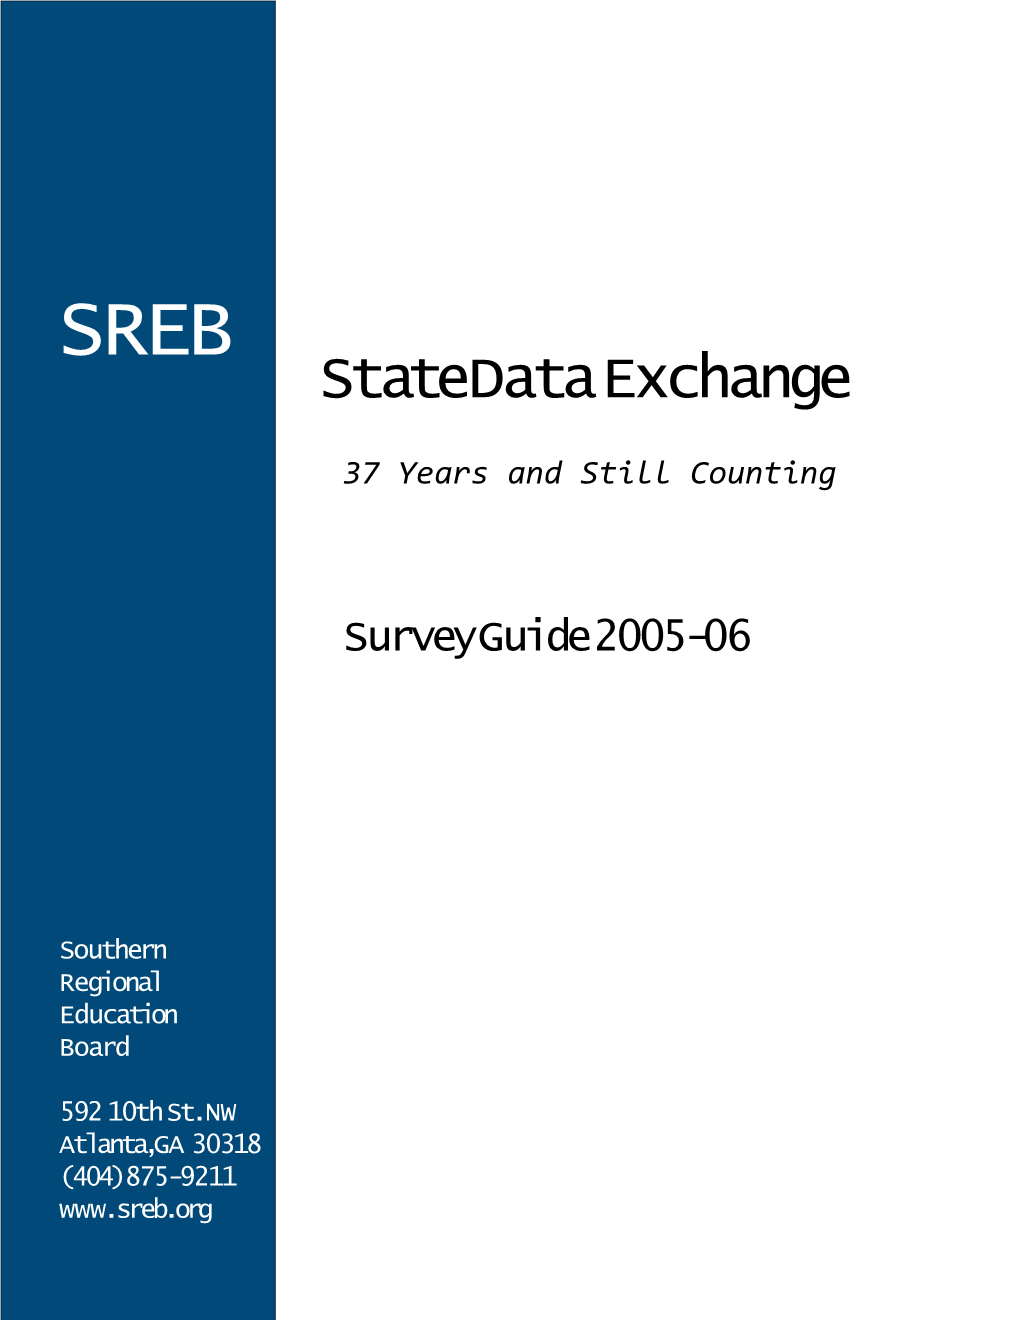 SREB State Data Exchange Survey 1998-99